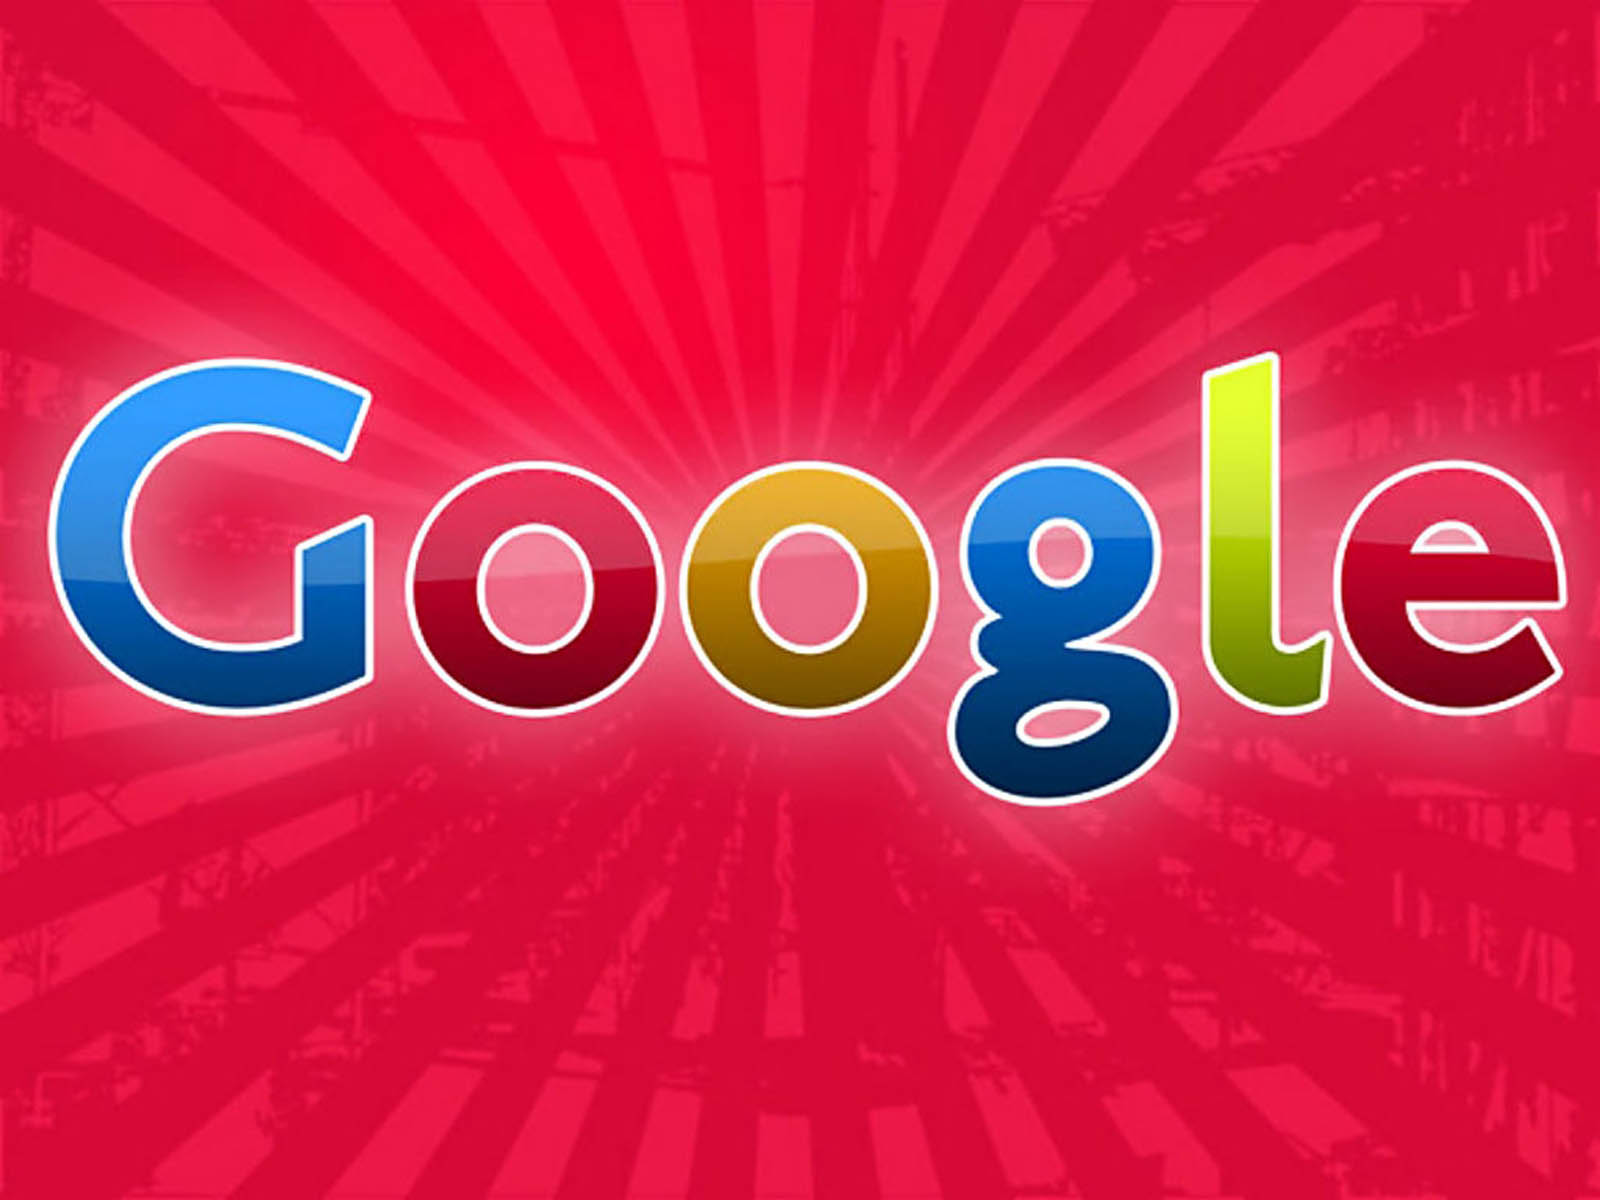 google wallpaper background,text,font,logo,graphic design,graphics